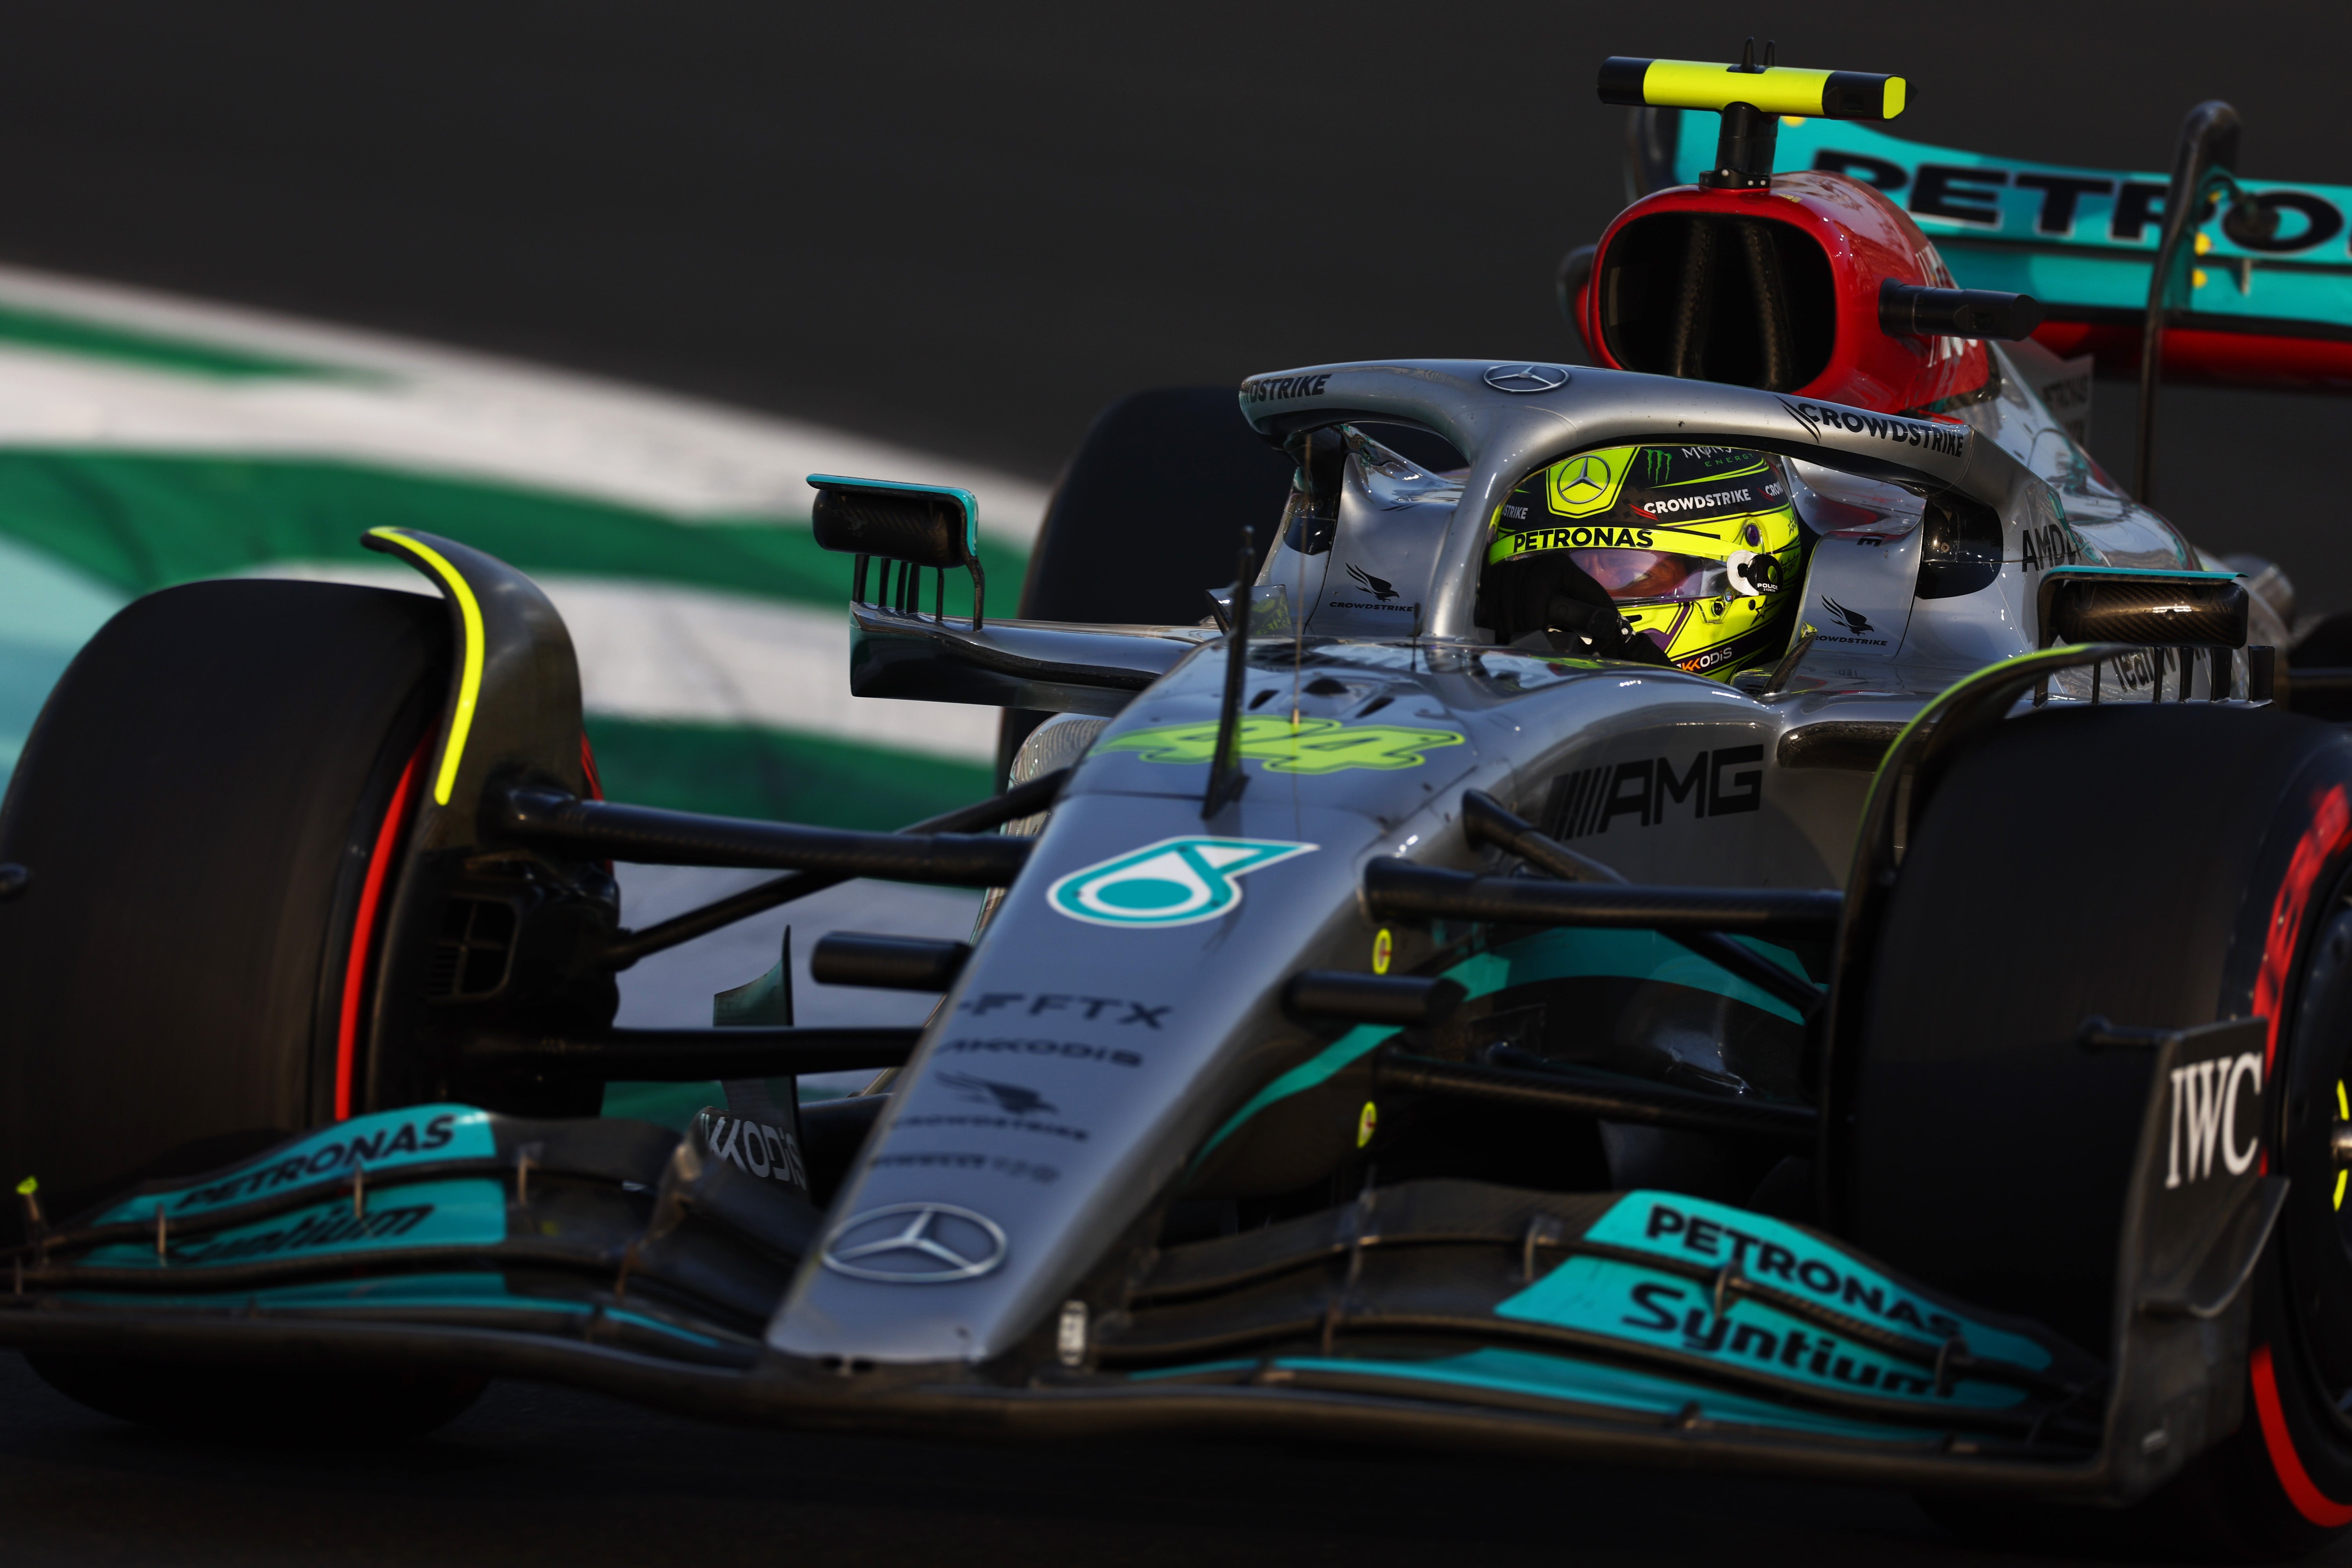 Lewis Hamilton finished tenth at the Saudi Arabian Grand Prix